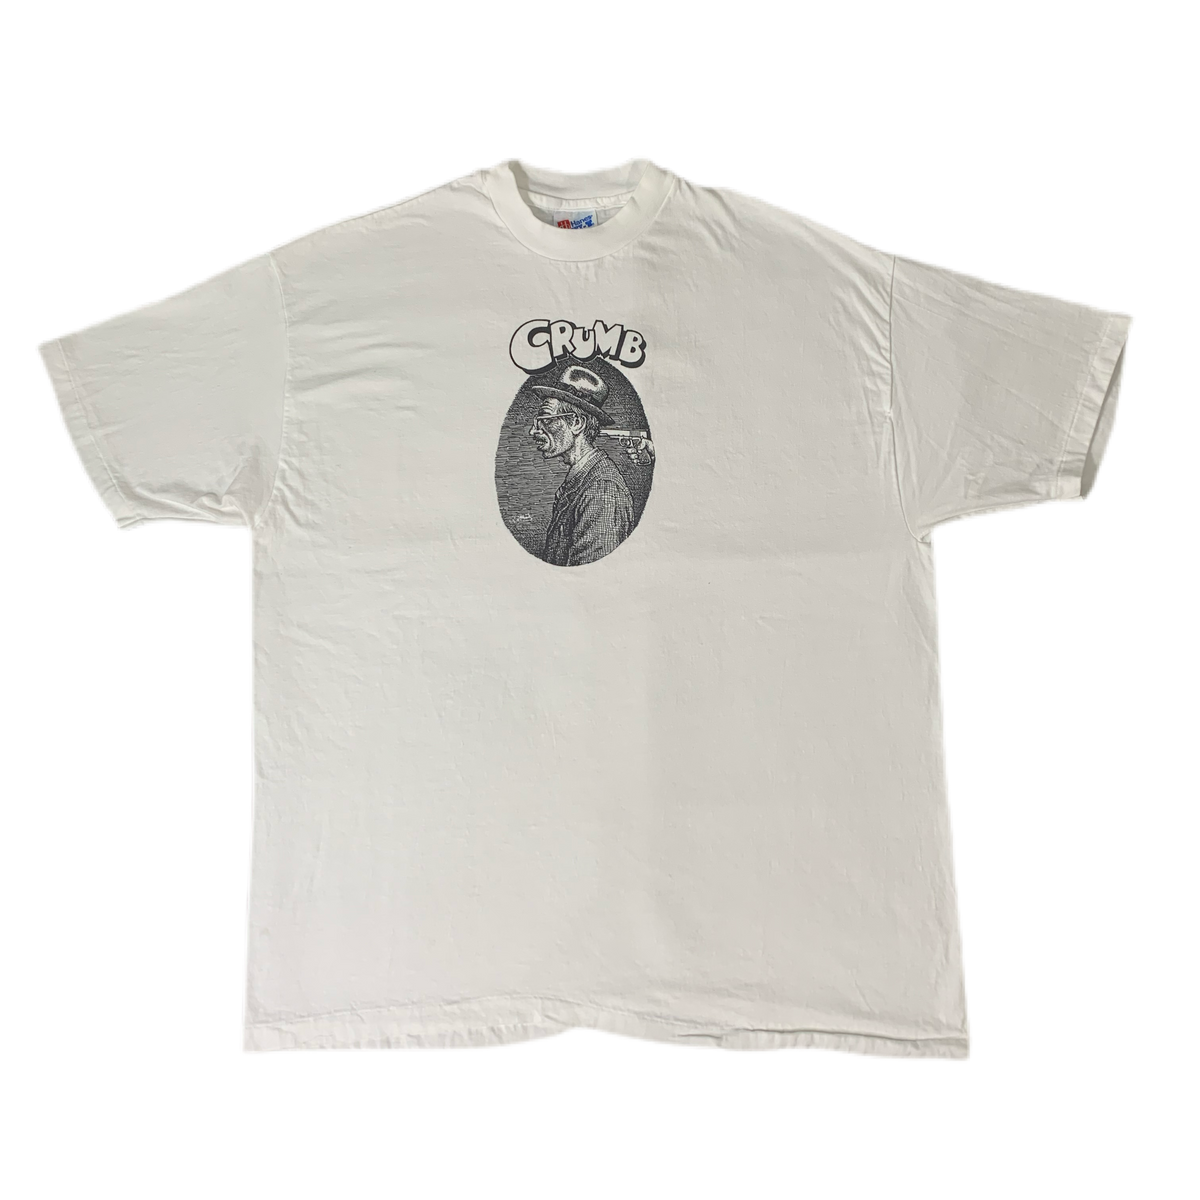 Vintage Robert Crumb “Crumb” T-Shirt | jointcustodydc